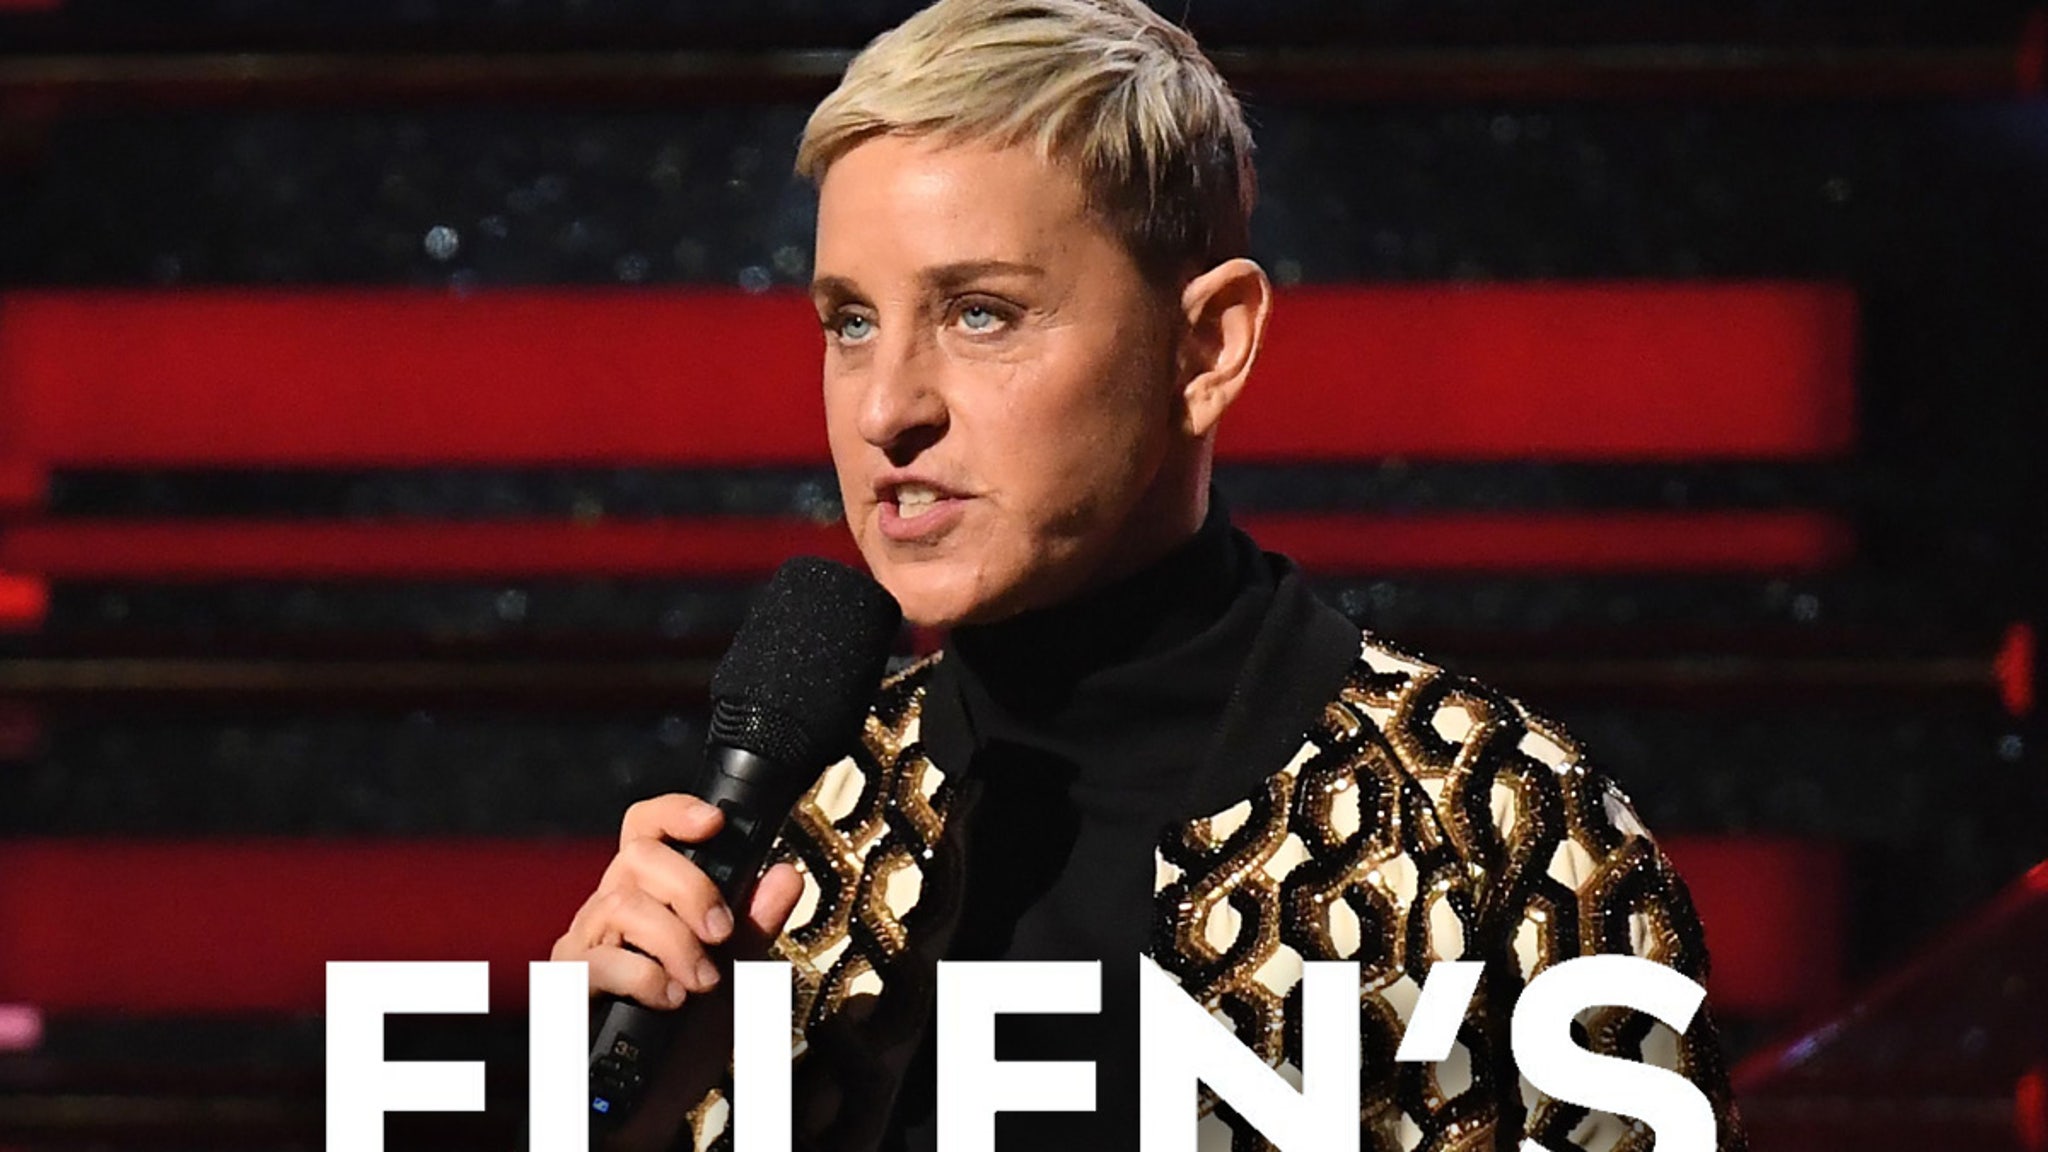 Ellen DeGeneres cancels series of 'Last Stand…Up' comedy tour dates